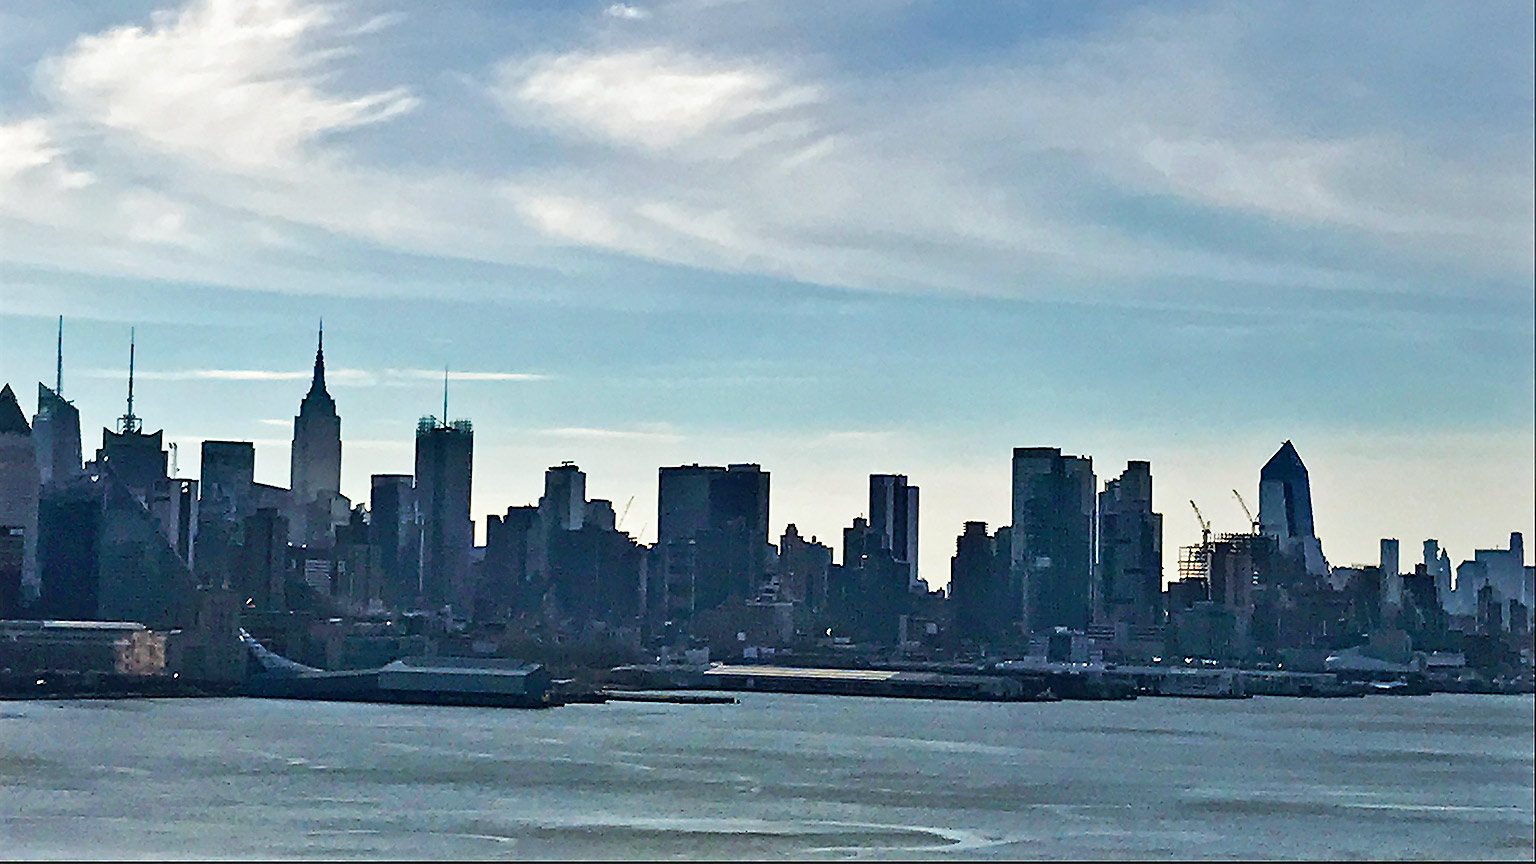 Manhattan skyline seen from the waterfront.